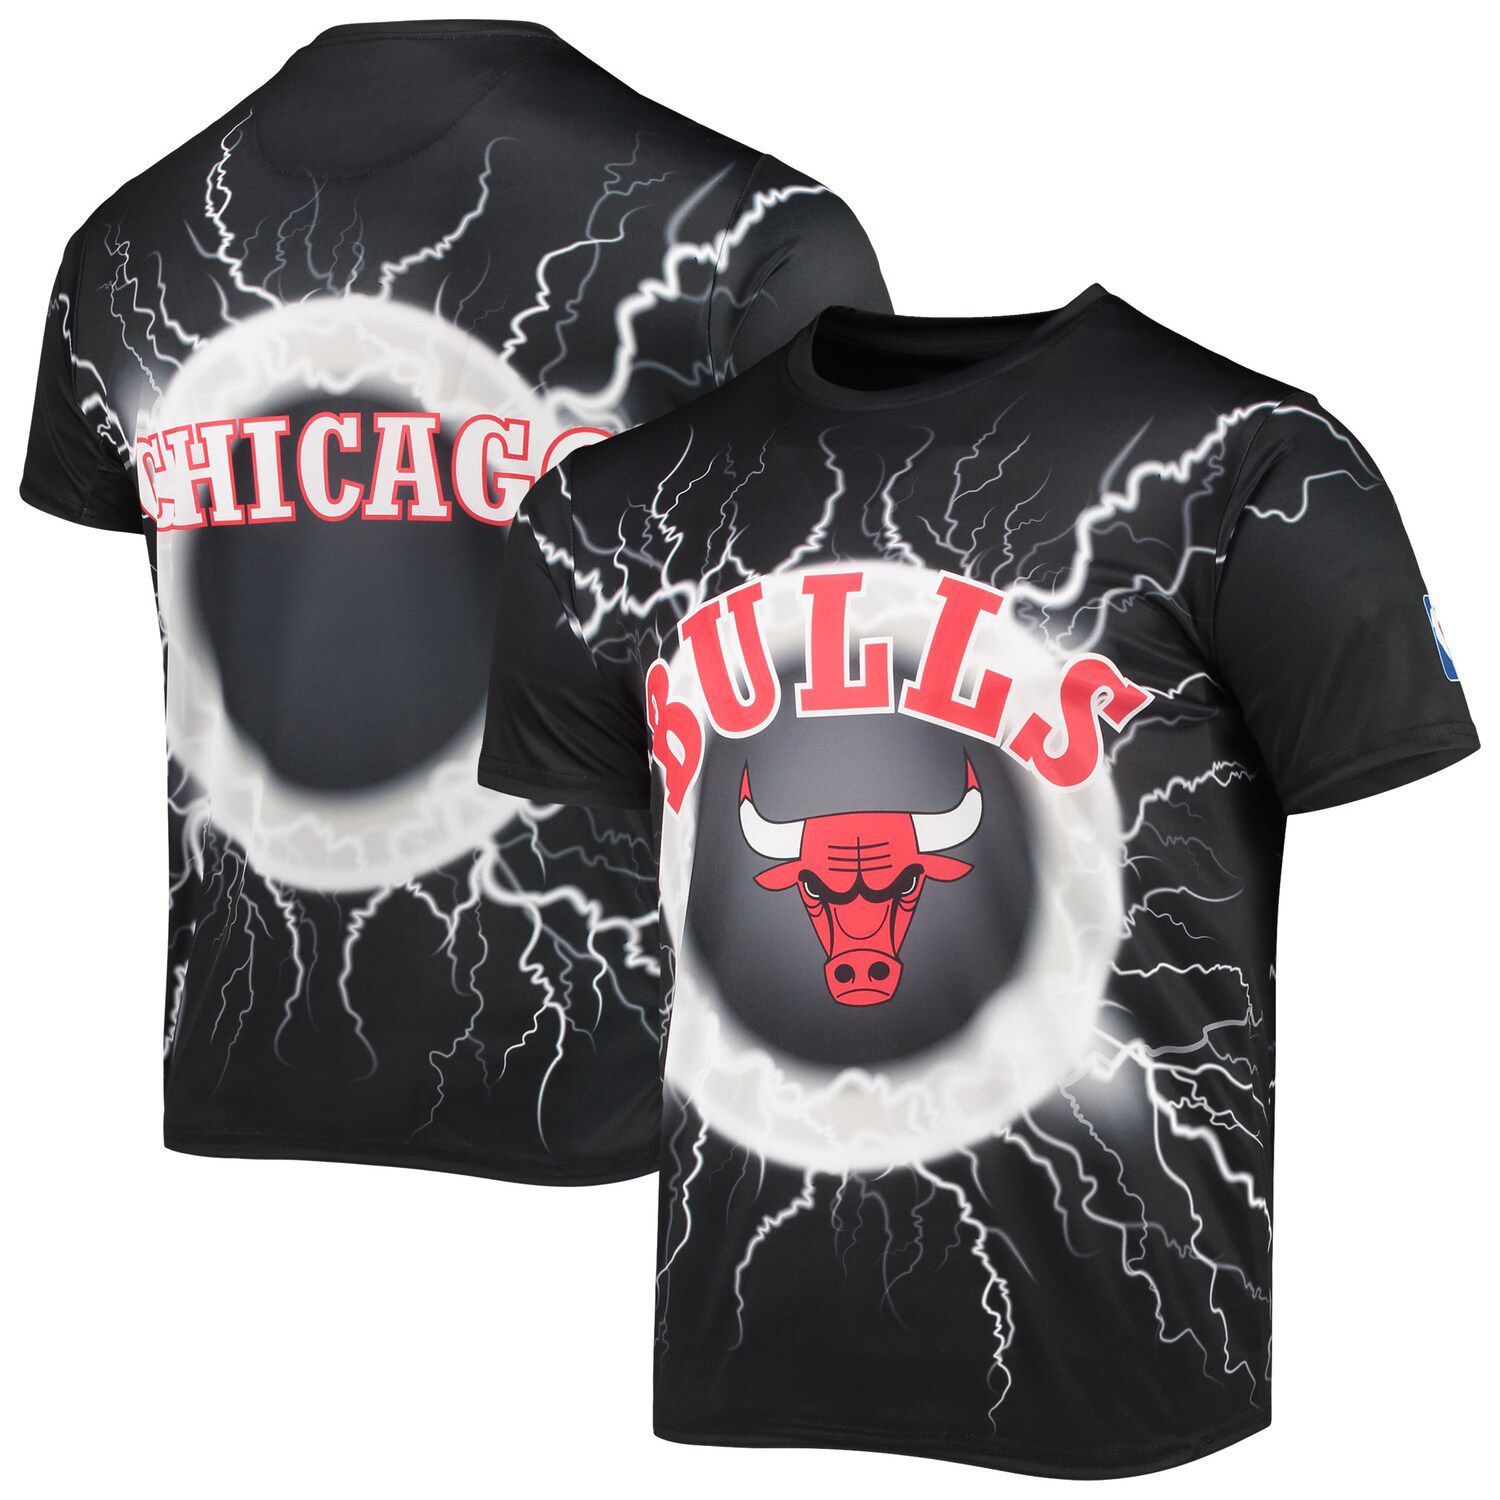 Image for Unbranded Men's Black Chicago Bulls Tornado Bolt T-Shirt at Kohl's.